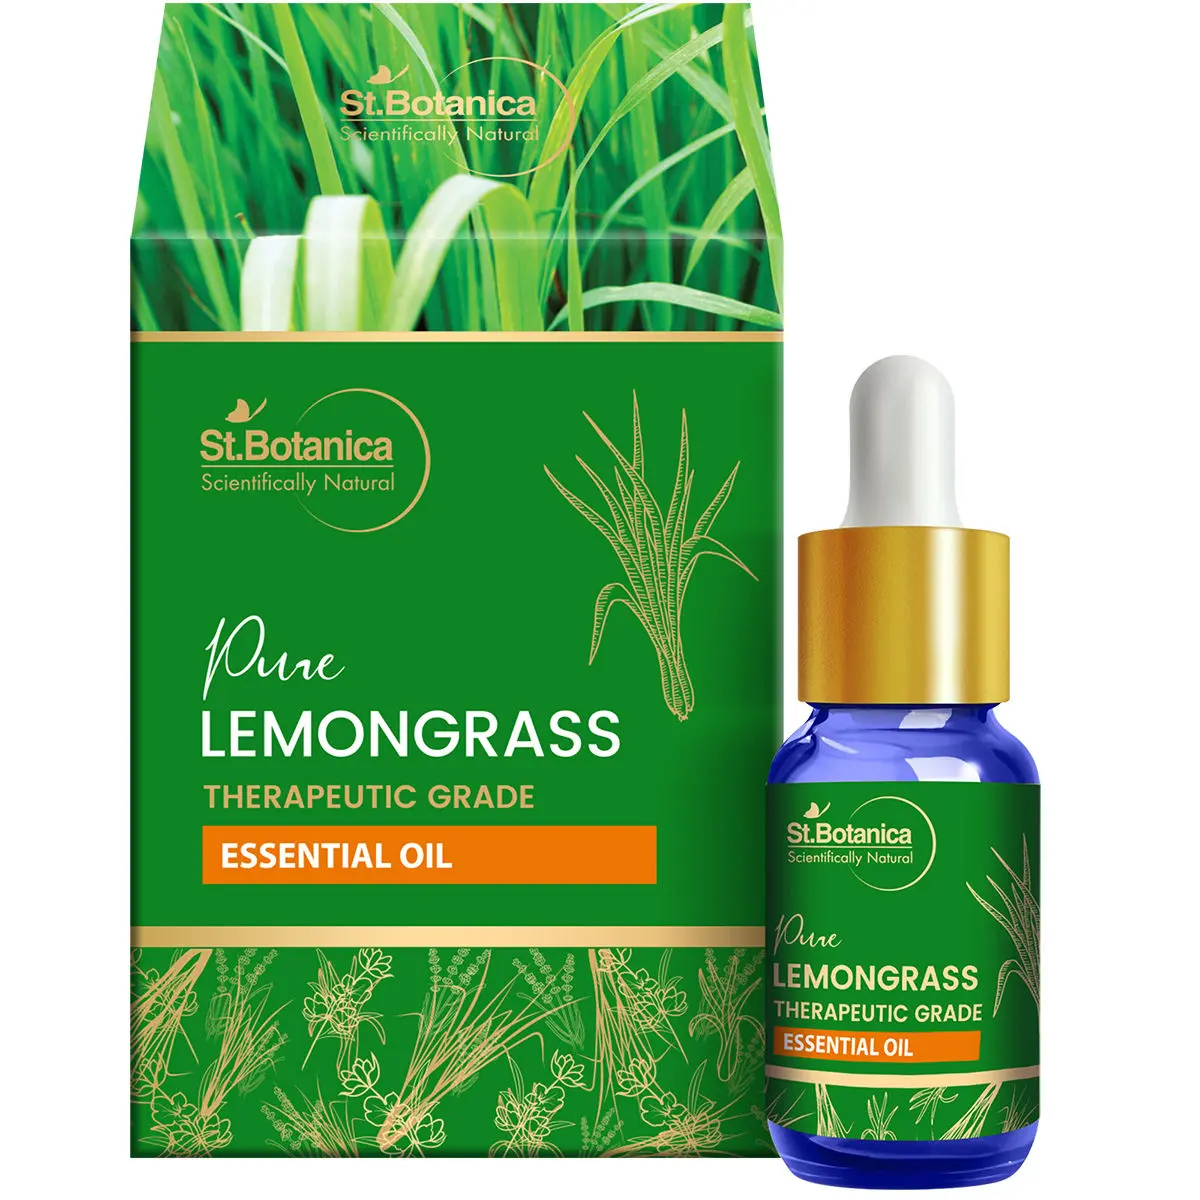 St.Botanica Pure Lemongrass Therapeutic Grade Essential Oil (15 ml)